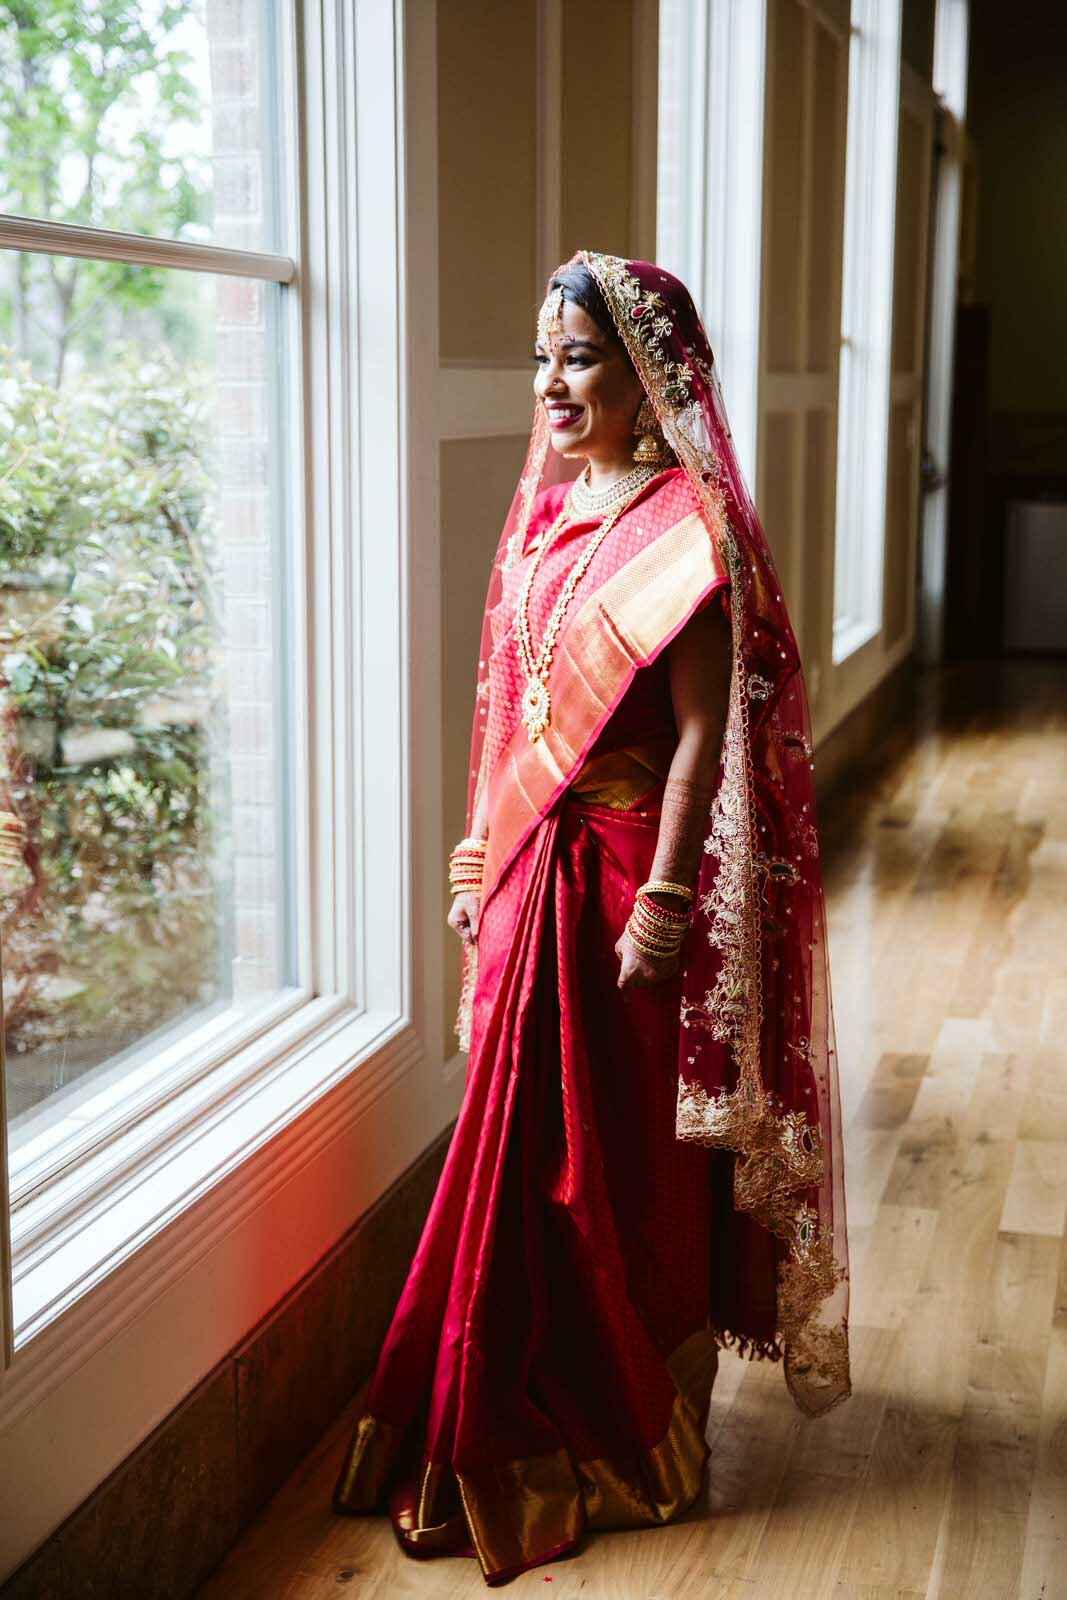 Portland-Indian-Wedding-33.JPG